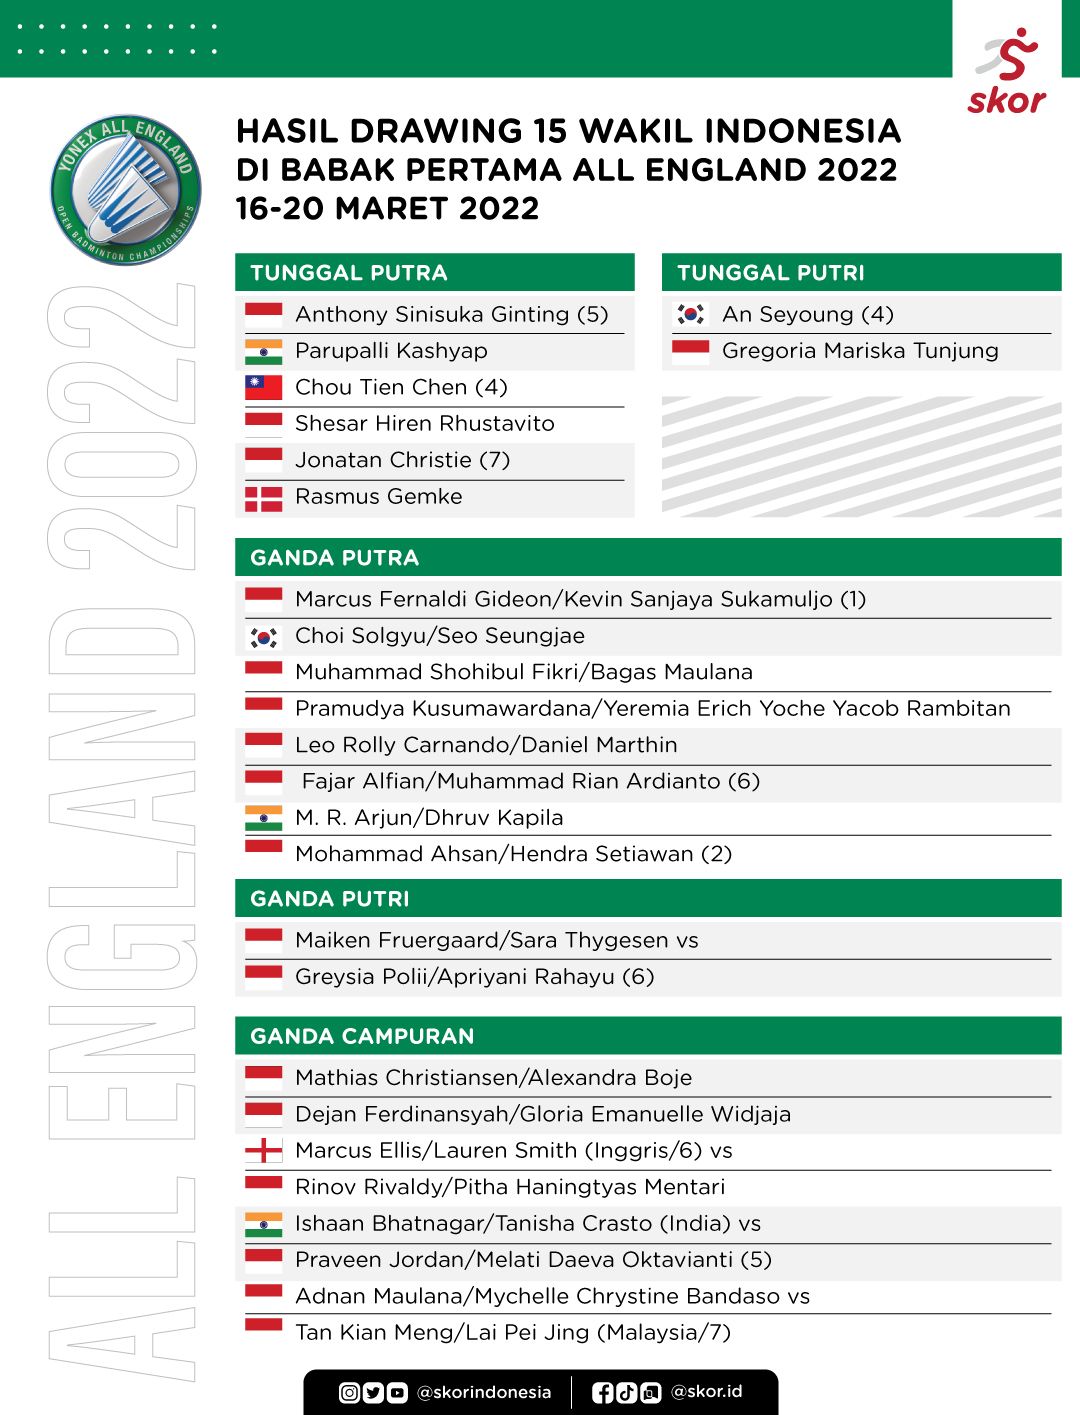 Hasil badminton all england 2022